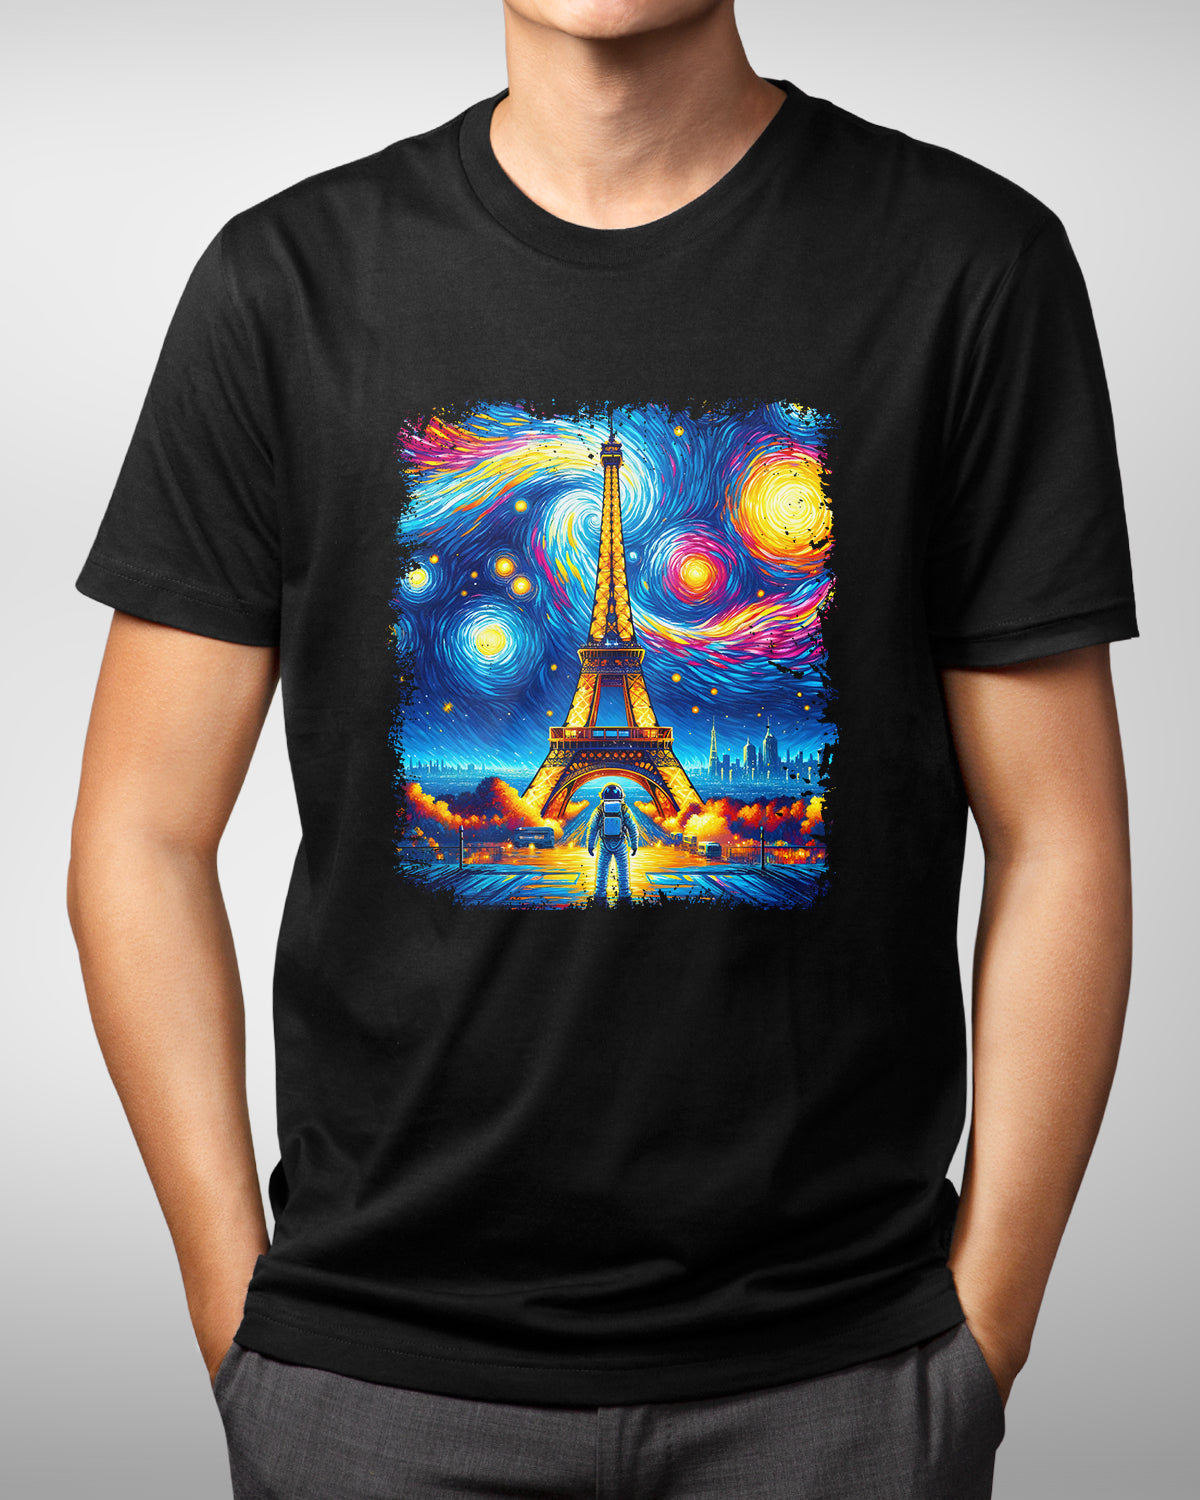 Paris Eiffel Tower Tee, French Travel Souvenir Shirt, Van Gogh Starry Night Astronaut, Europe Vacation, Architectural Gift